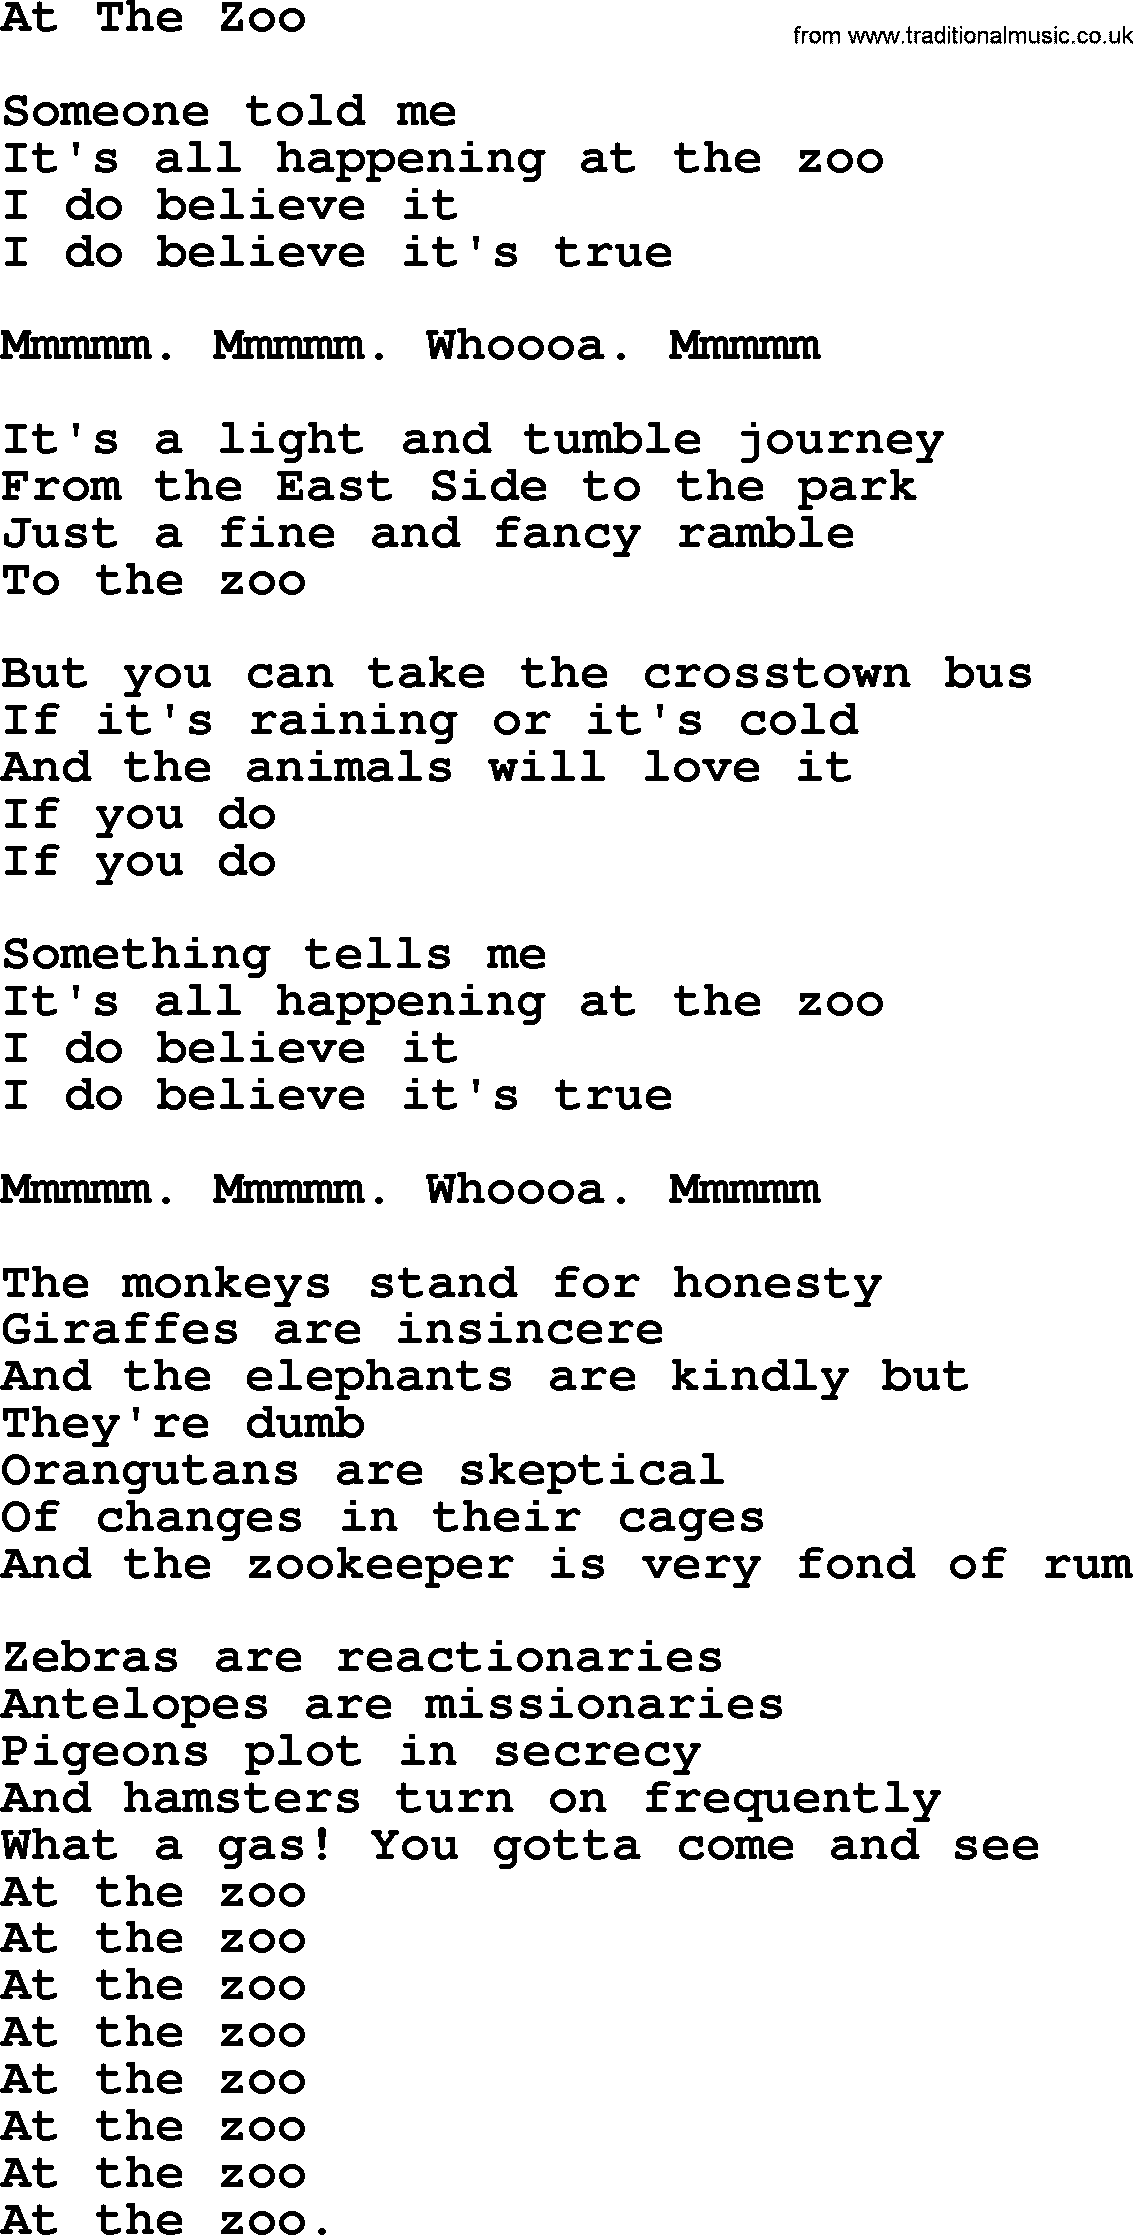 The Byrds song At The Zoo, lyrics